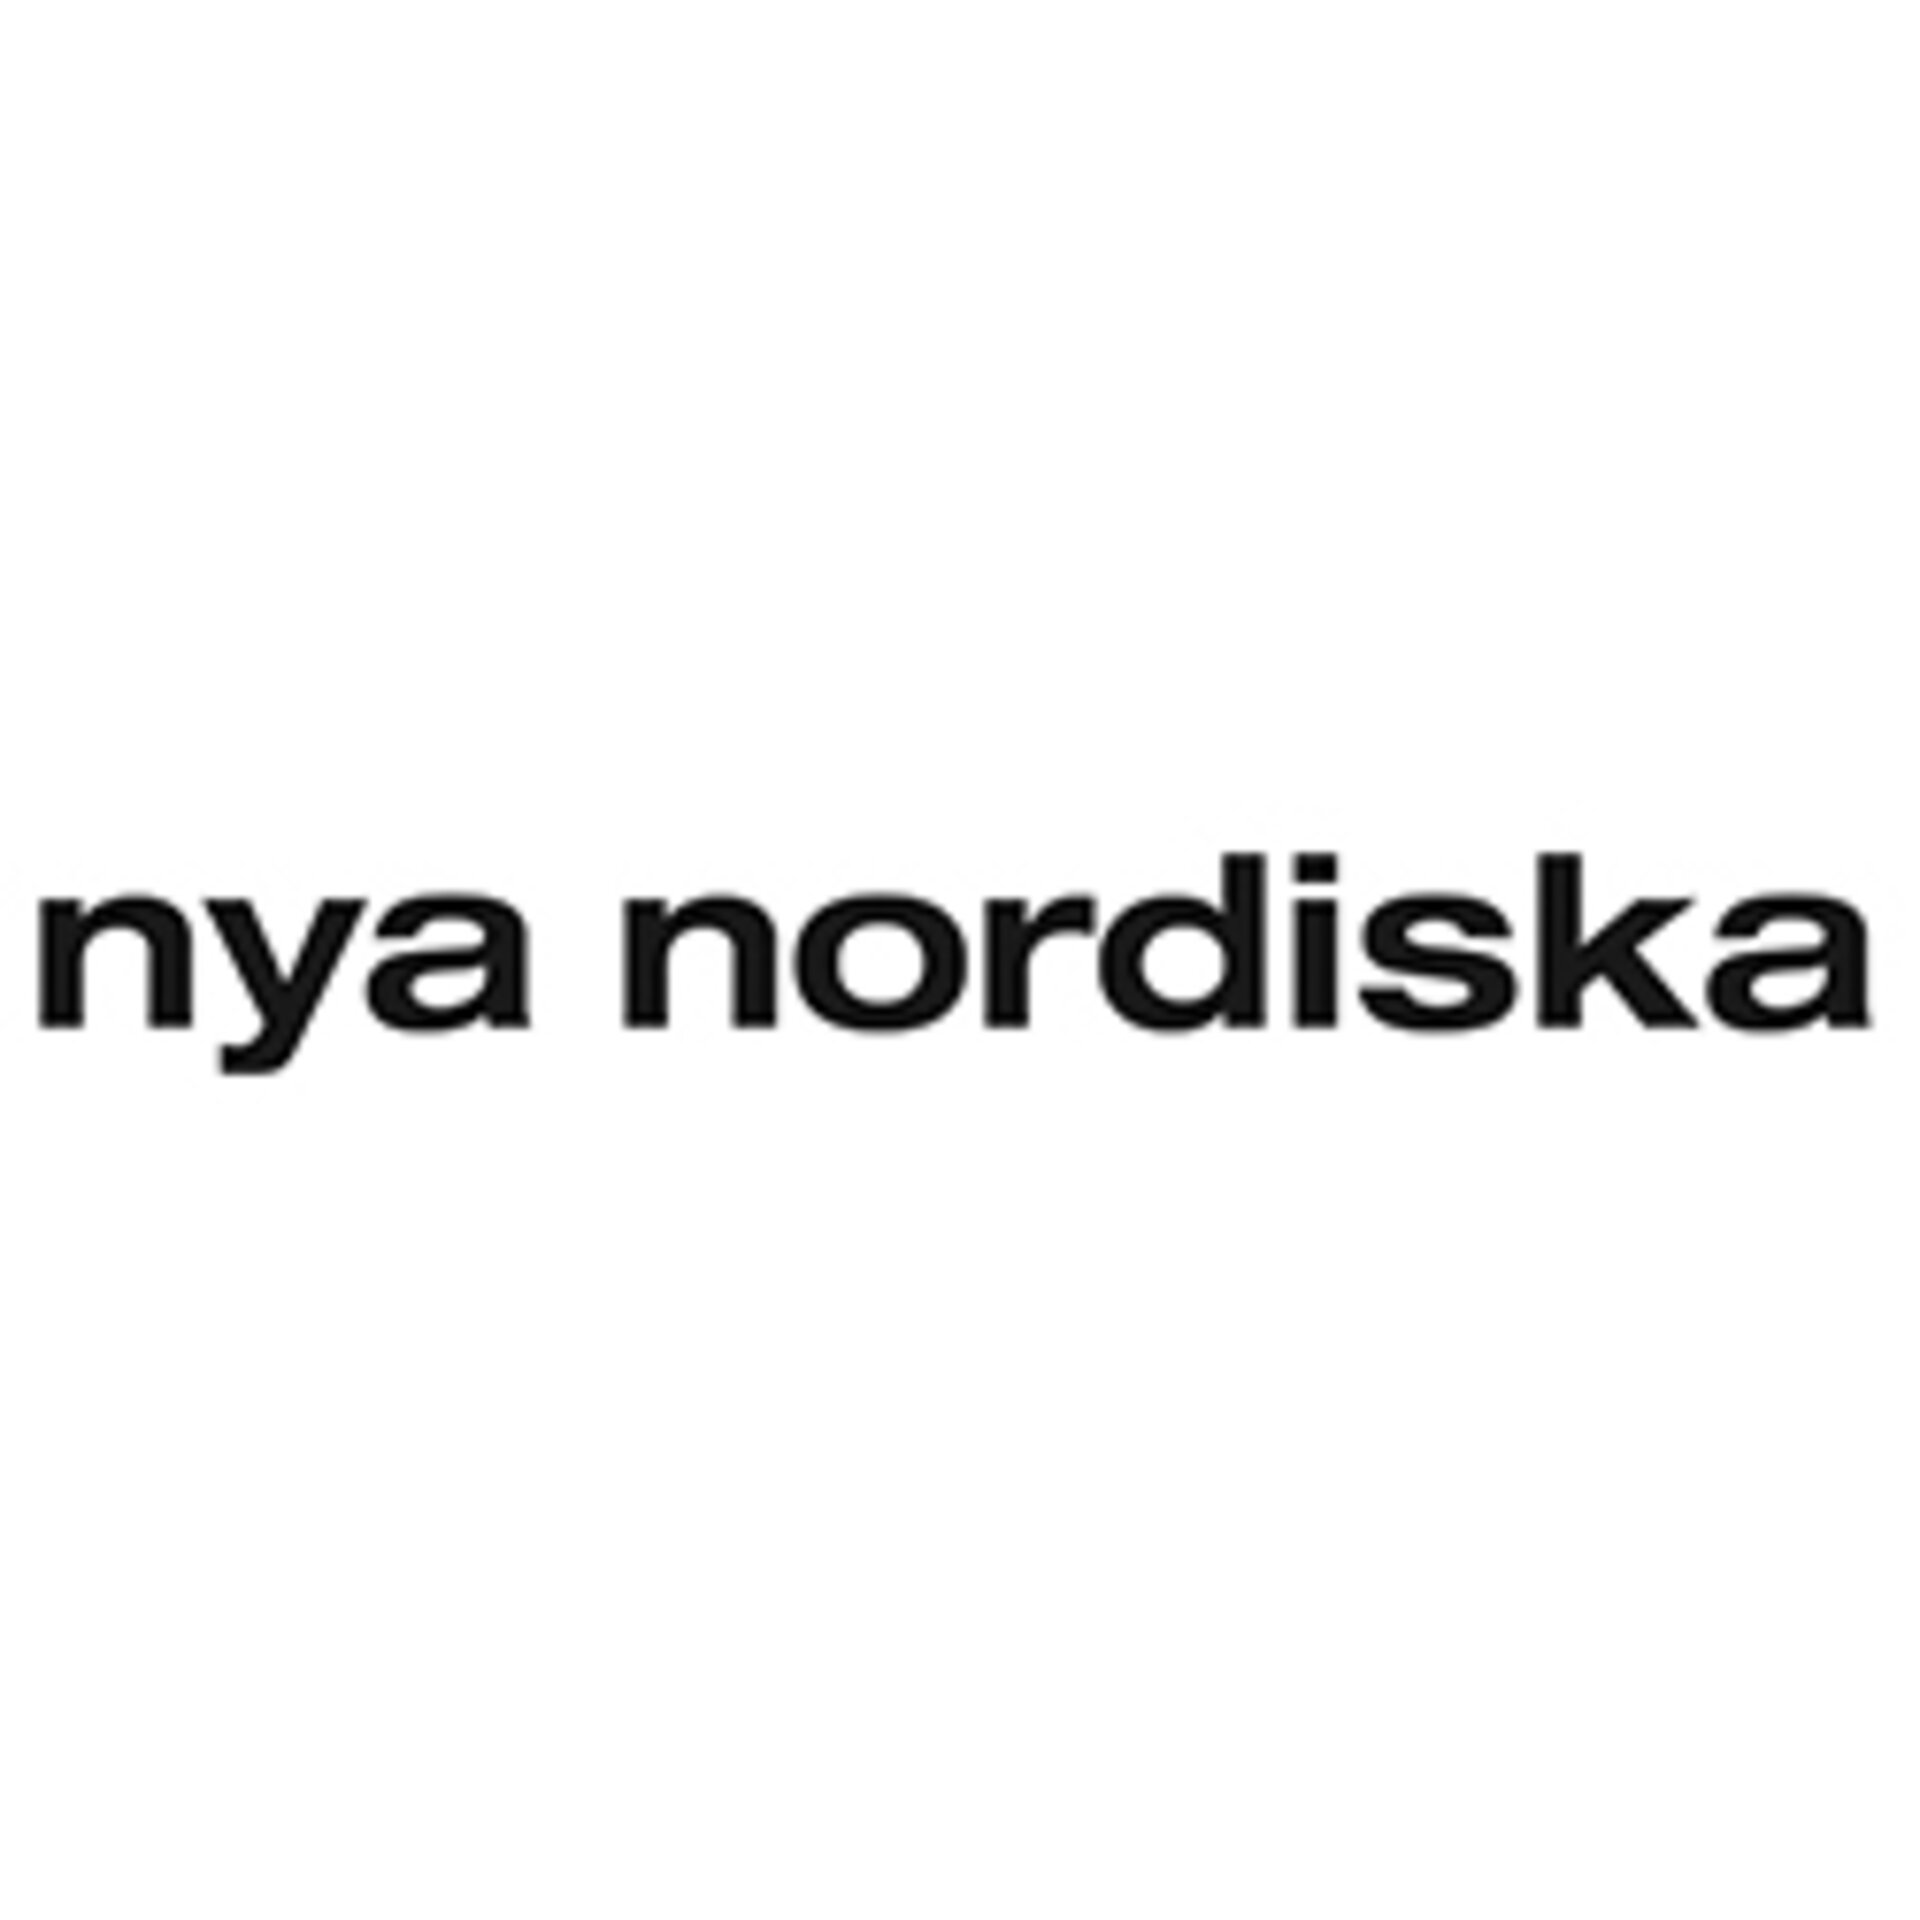 Logo der Designmarke Nya nordiska